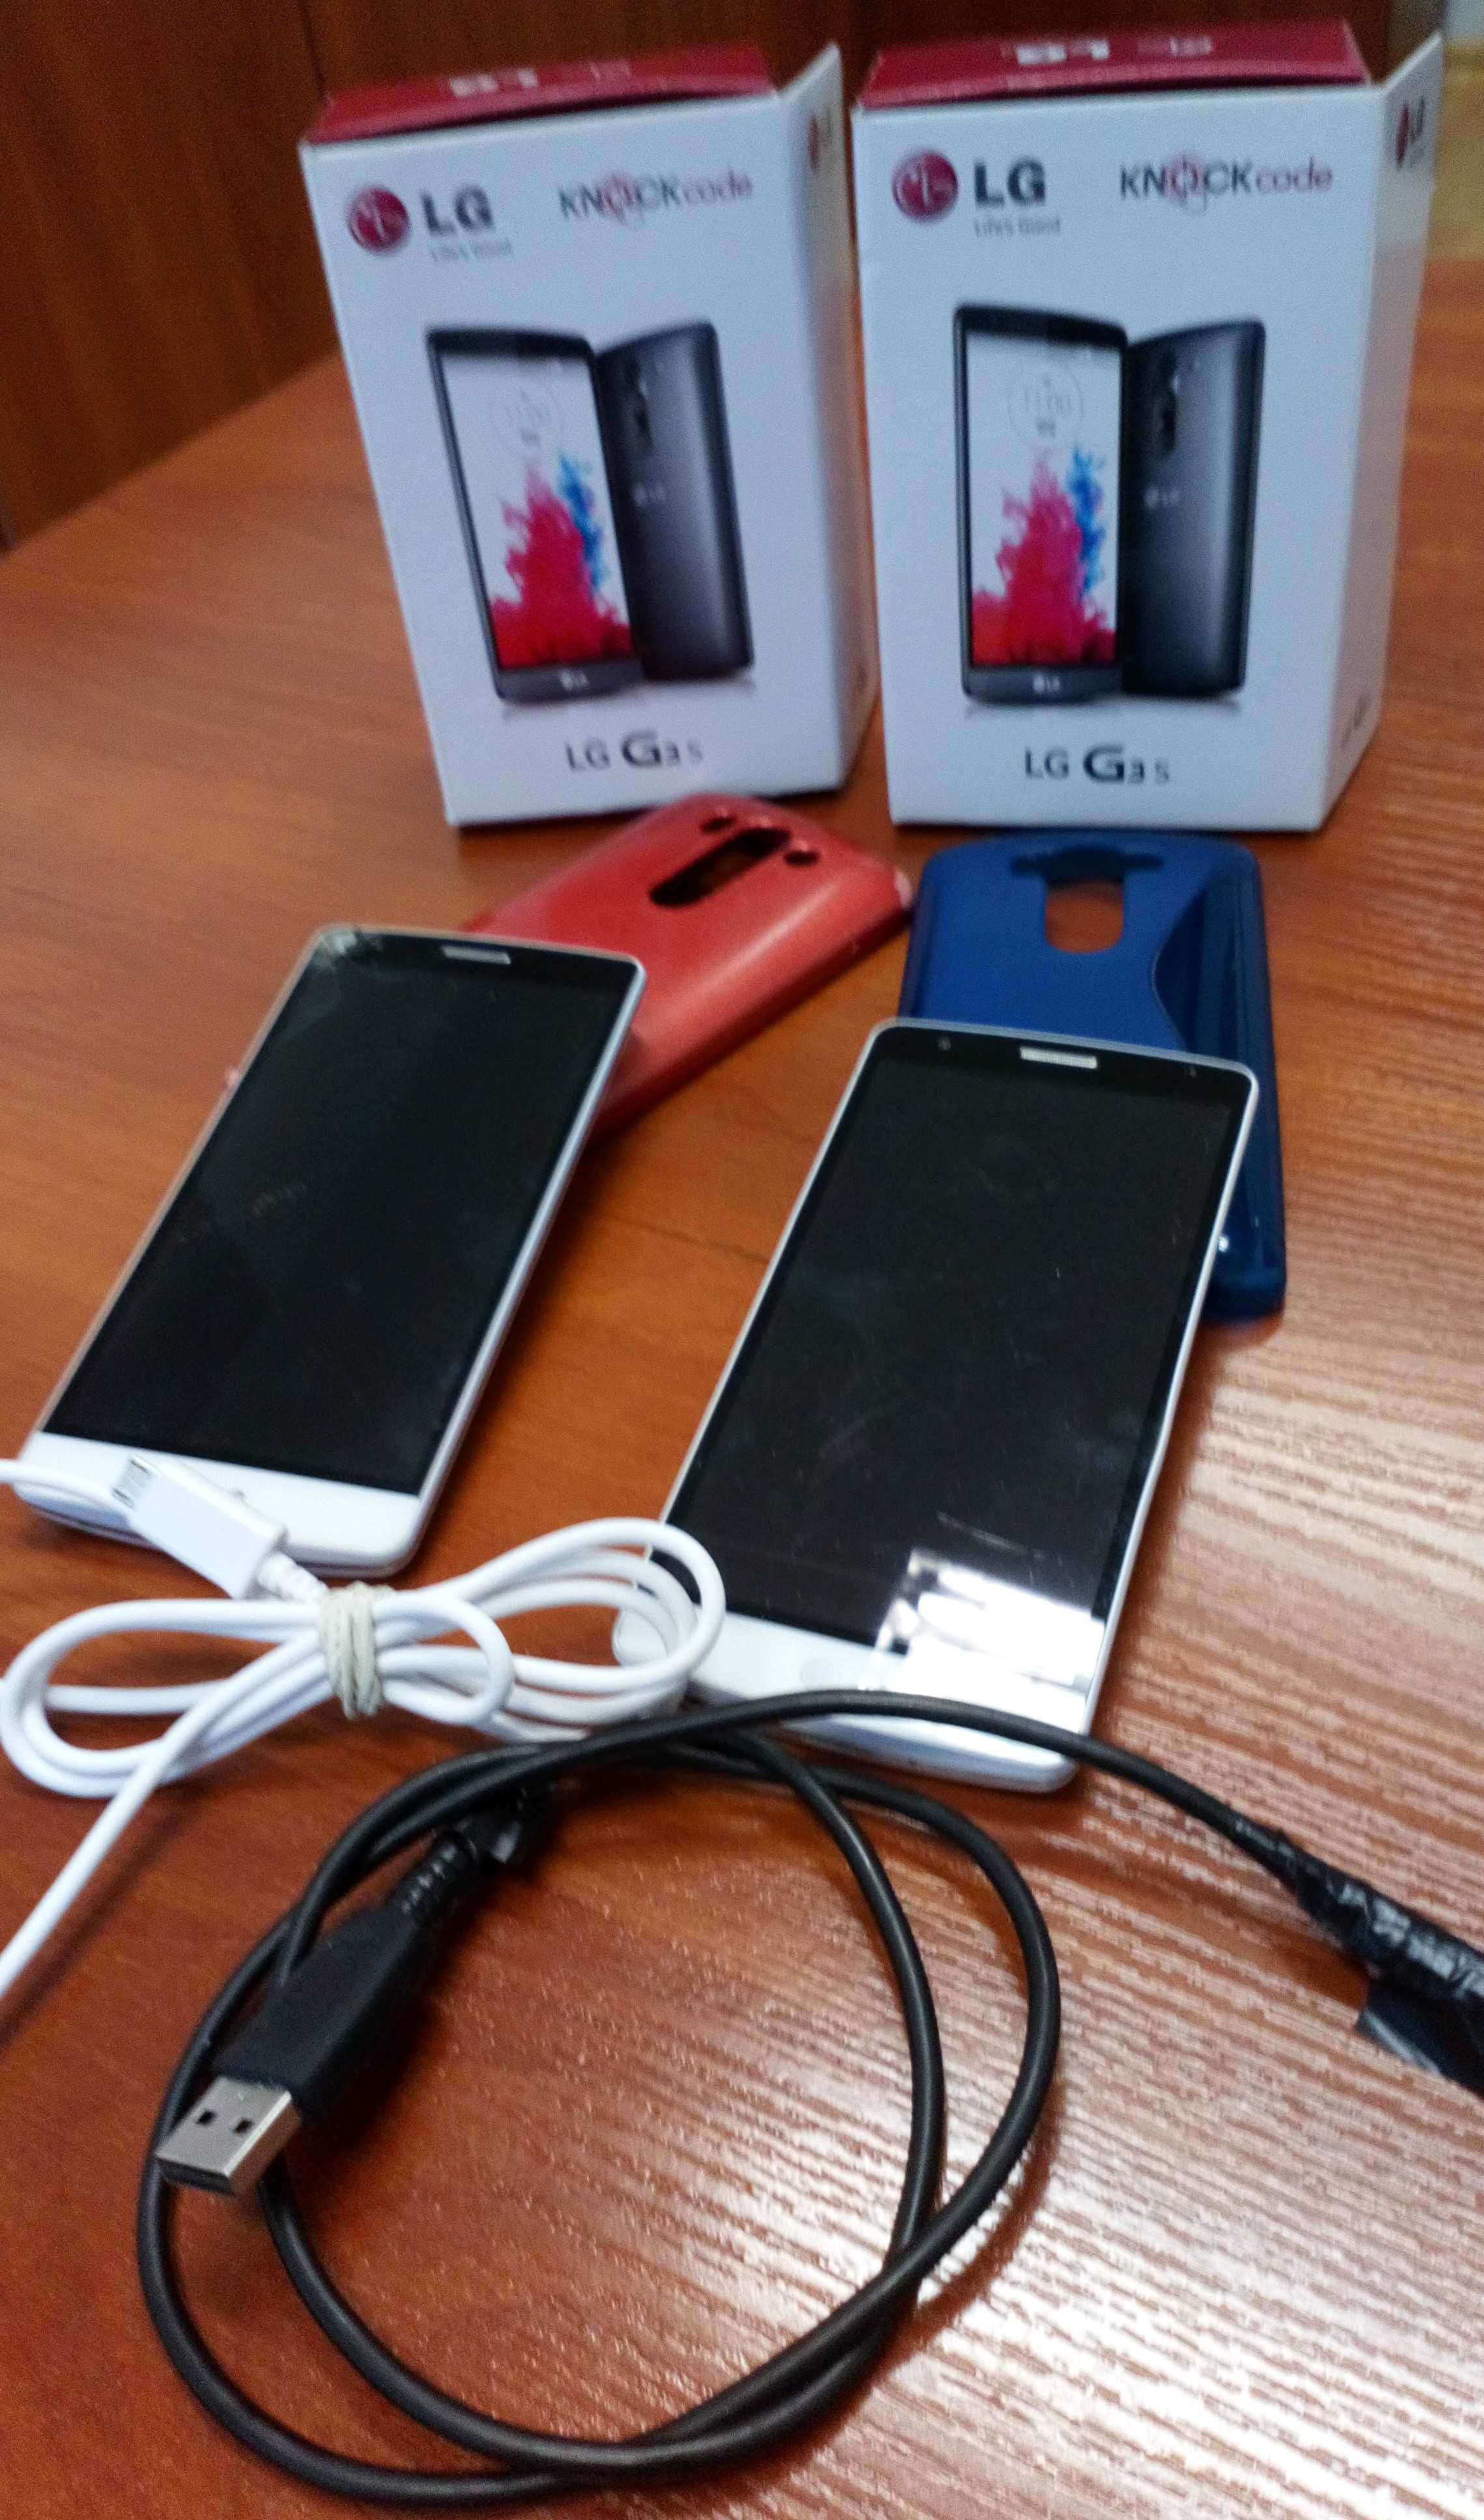 Smartfon LG G3s dwie sztuki, białe